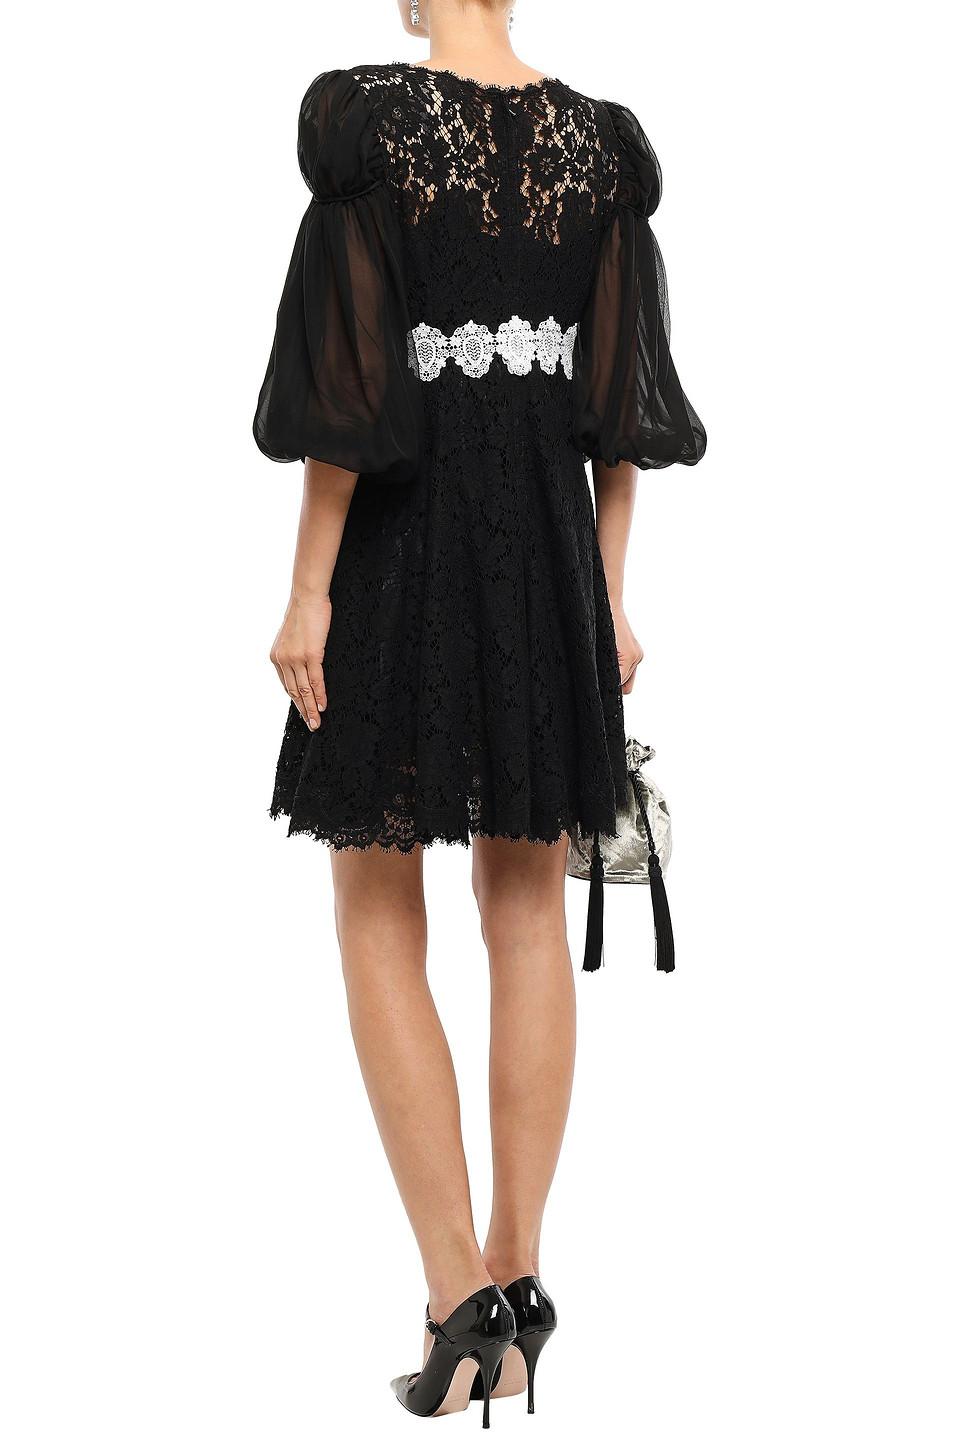 DOLCE & GABBANA Cotton-blend corded lace dress